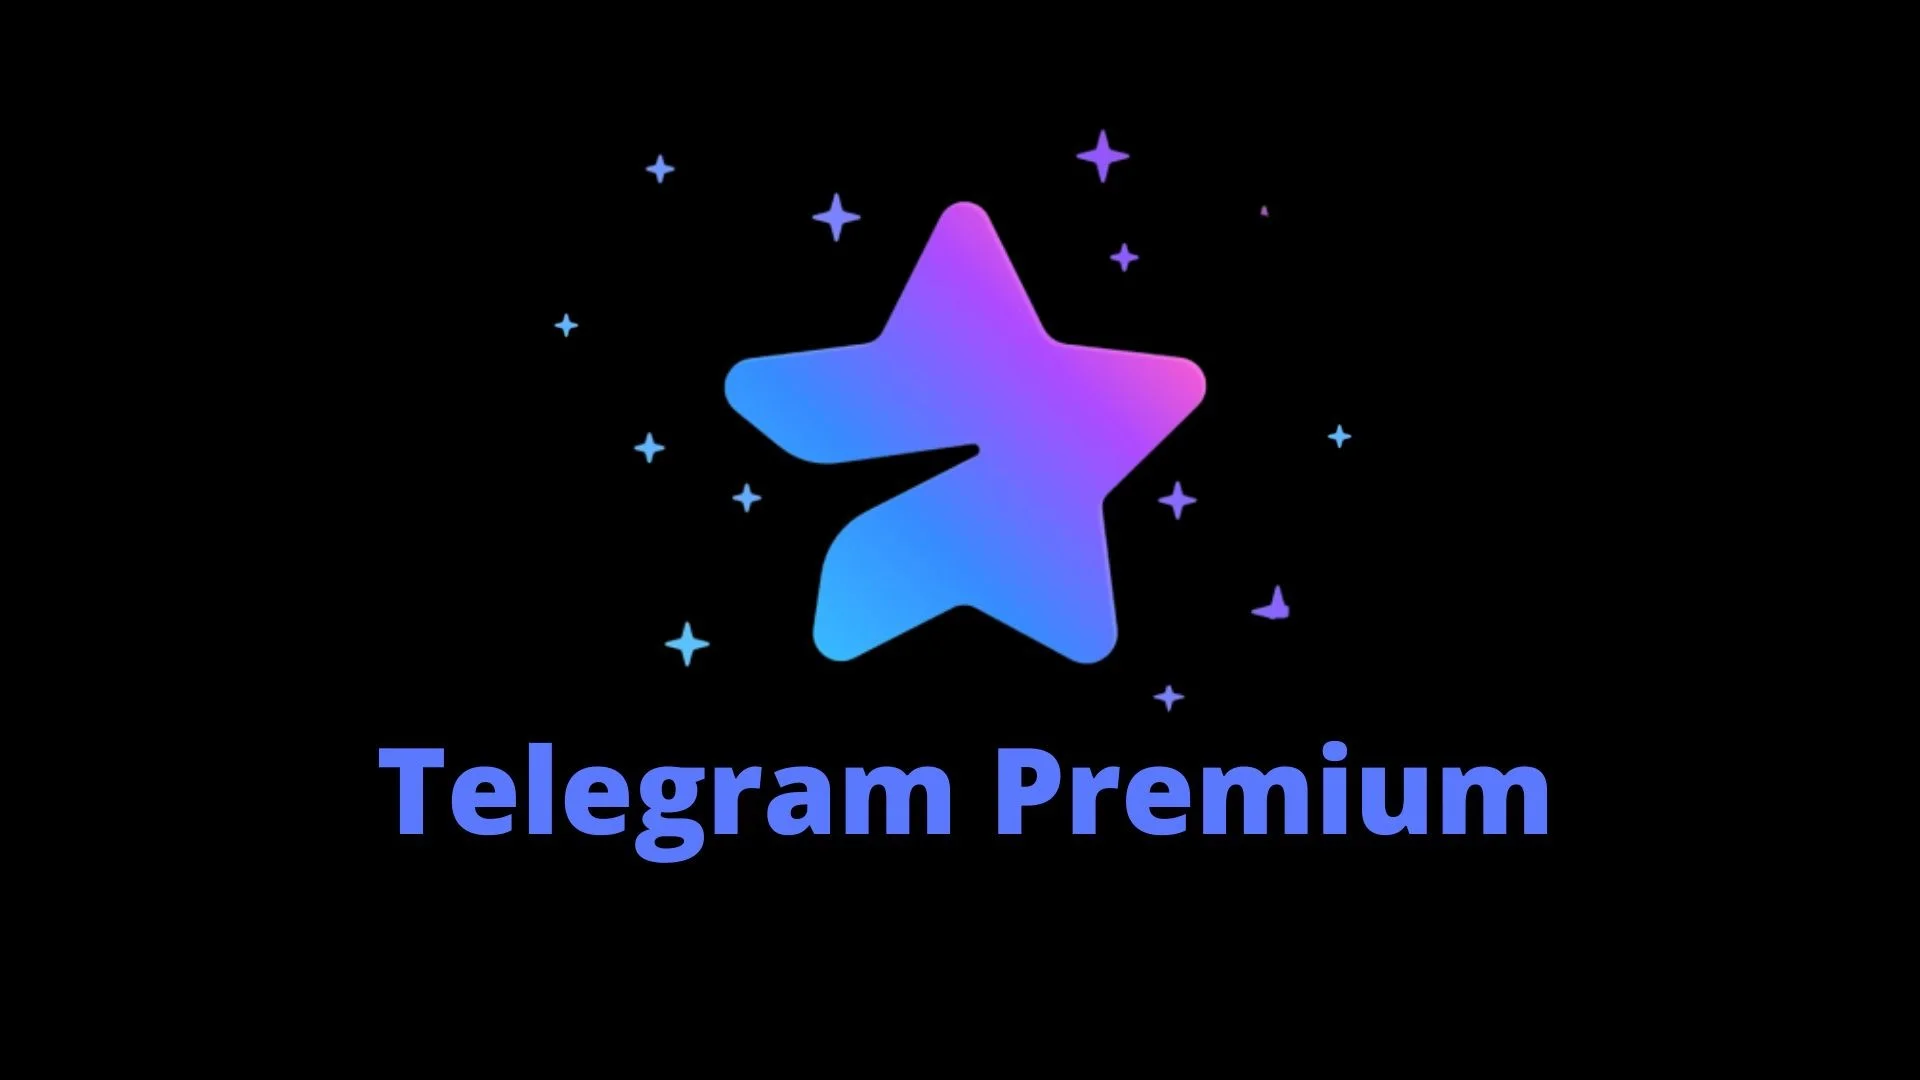 Telegram will get a new Premium feature